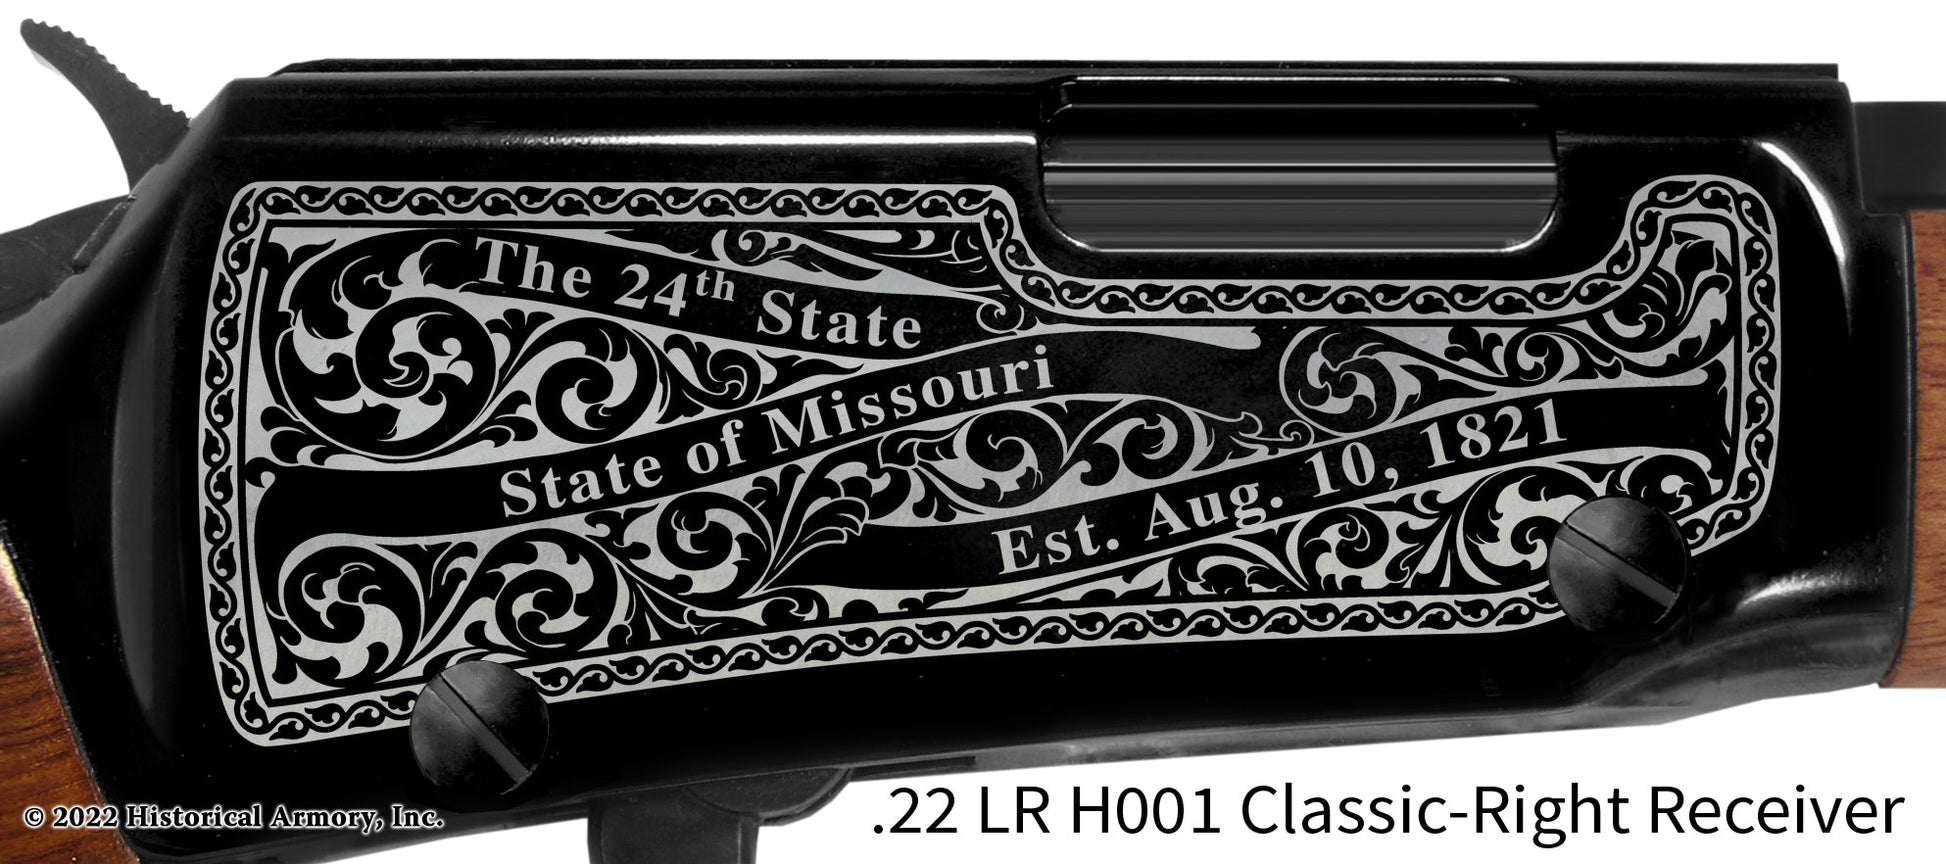 Daviess County Missouri Engraved Henry H001 Rifle